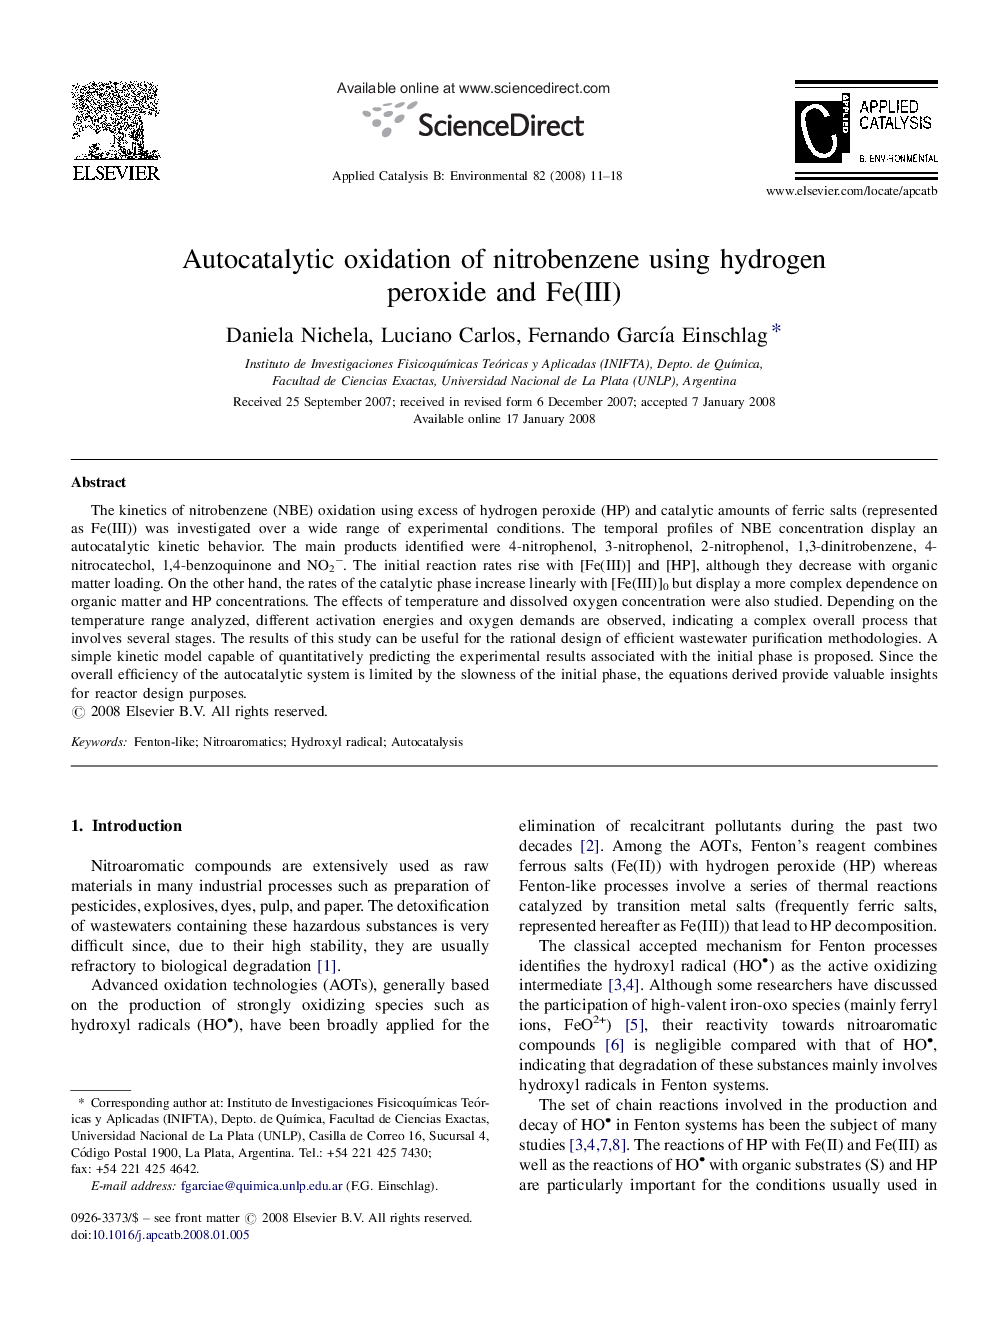 Autocatalytic oxidation of nitrobenzene using hydrogen peroxide and Fe(III)